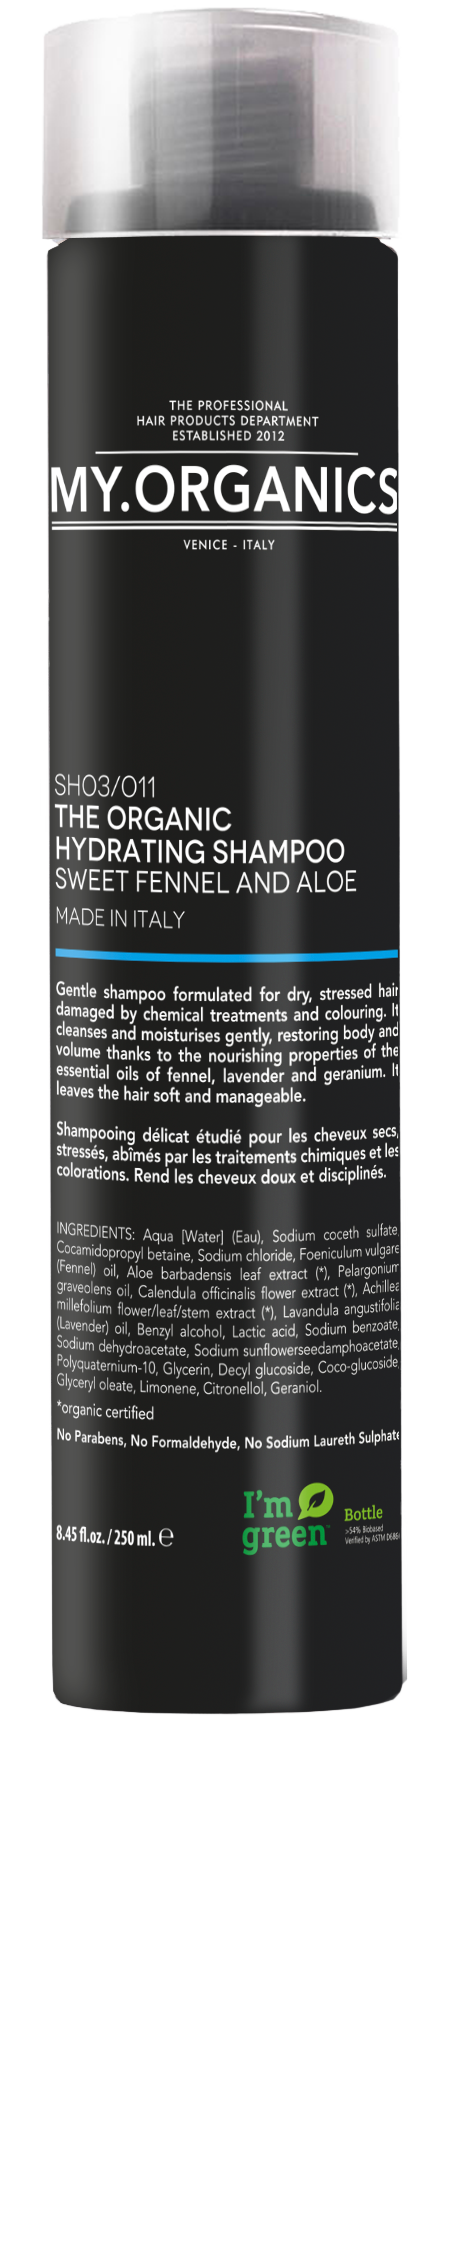 The Organic Hydrating Shampoo 250ml